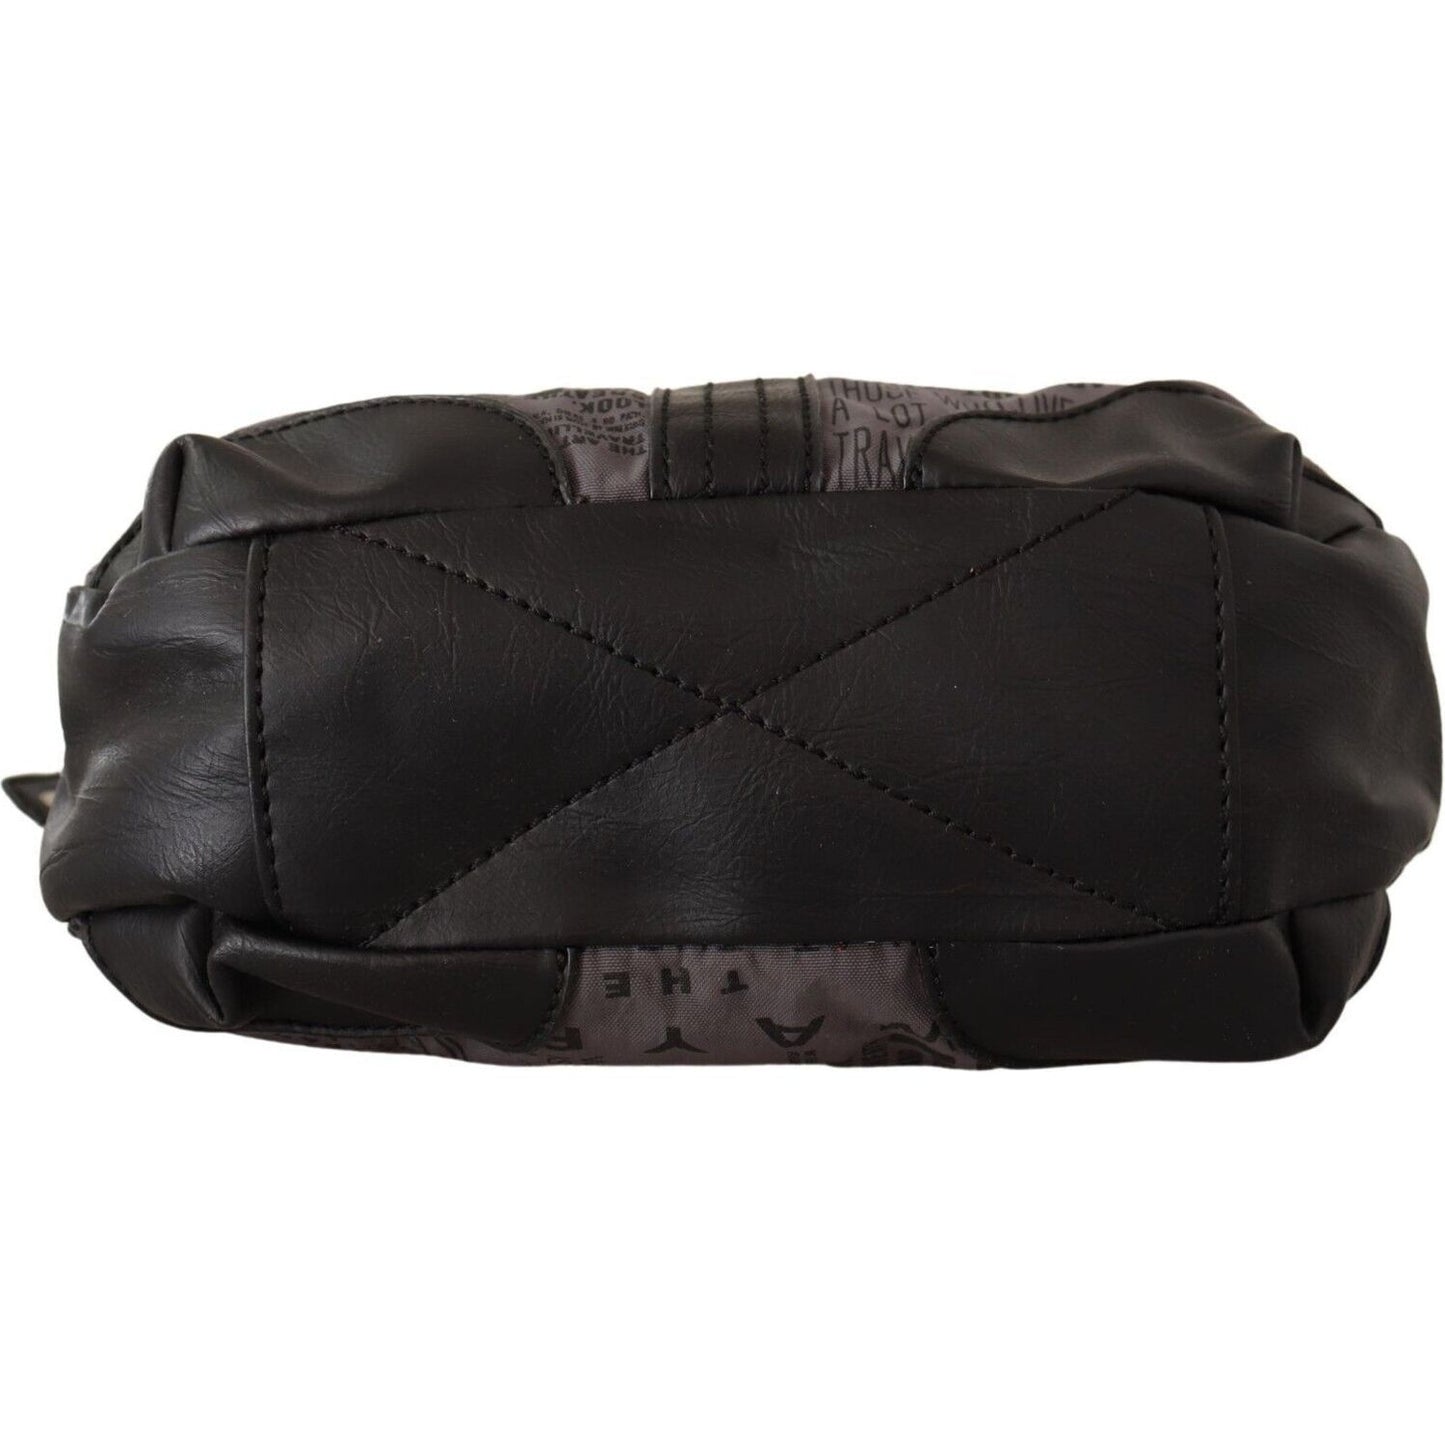 WAYFARER Chic Gray Fabric Shoulder Handbag Shoulder Bag gray-printed-handbag-shoulder-purse-fabric-bag s-l1600-3-22-5b998898-5d8.jpg